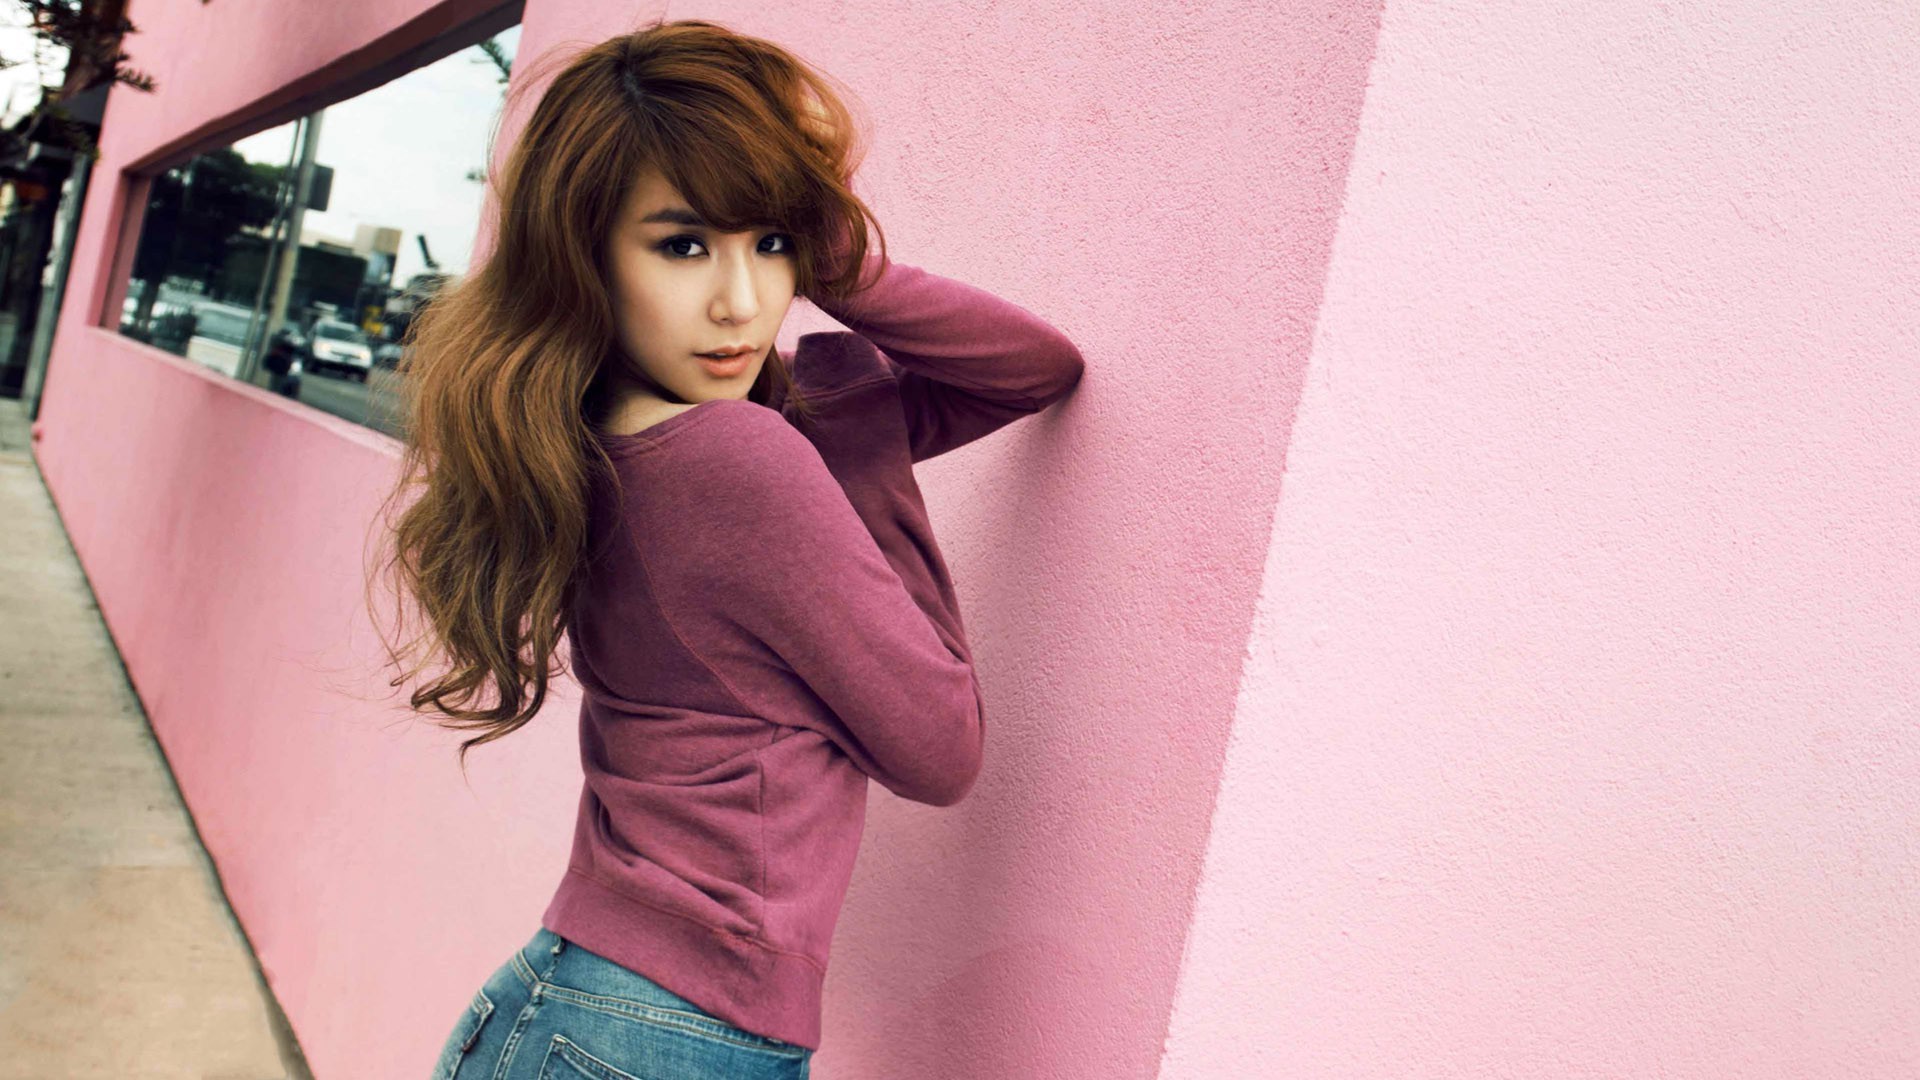 Snsd, Girls Generation, Asian, Model, Musicians, Singer, - Tiffany Hwang Wallpaper Hd Pink , HD Wallpaper & Backgrounds